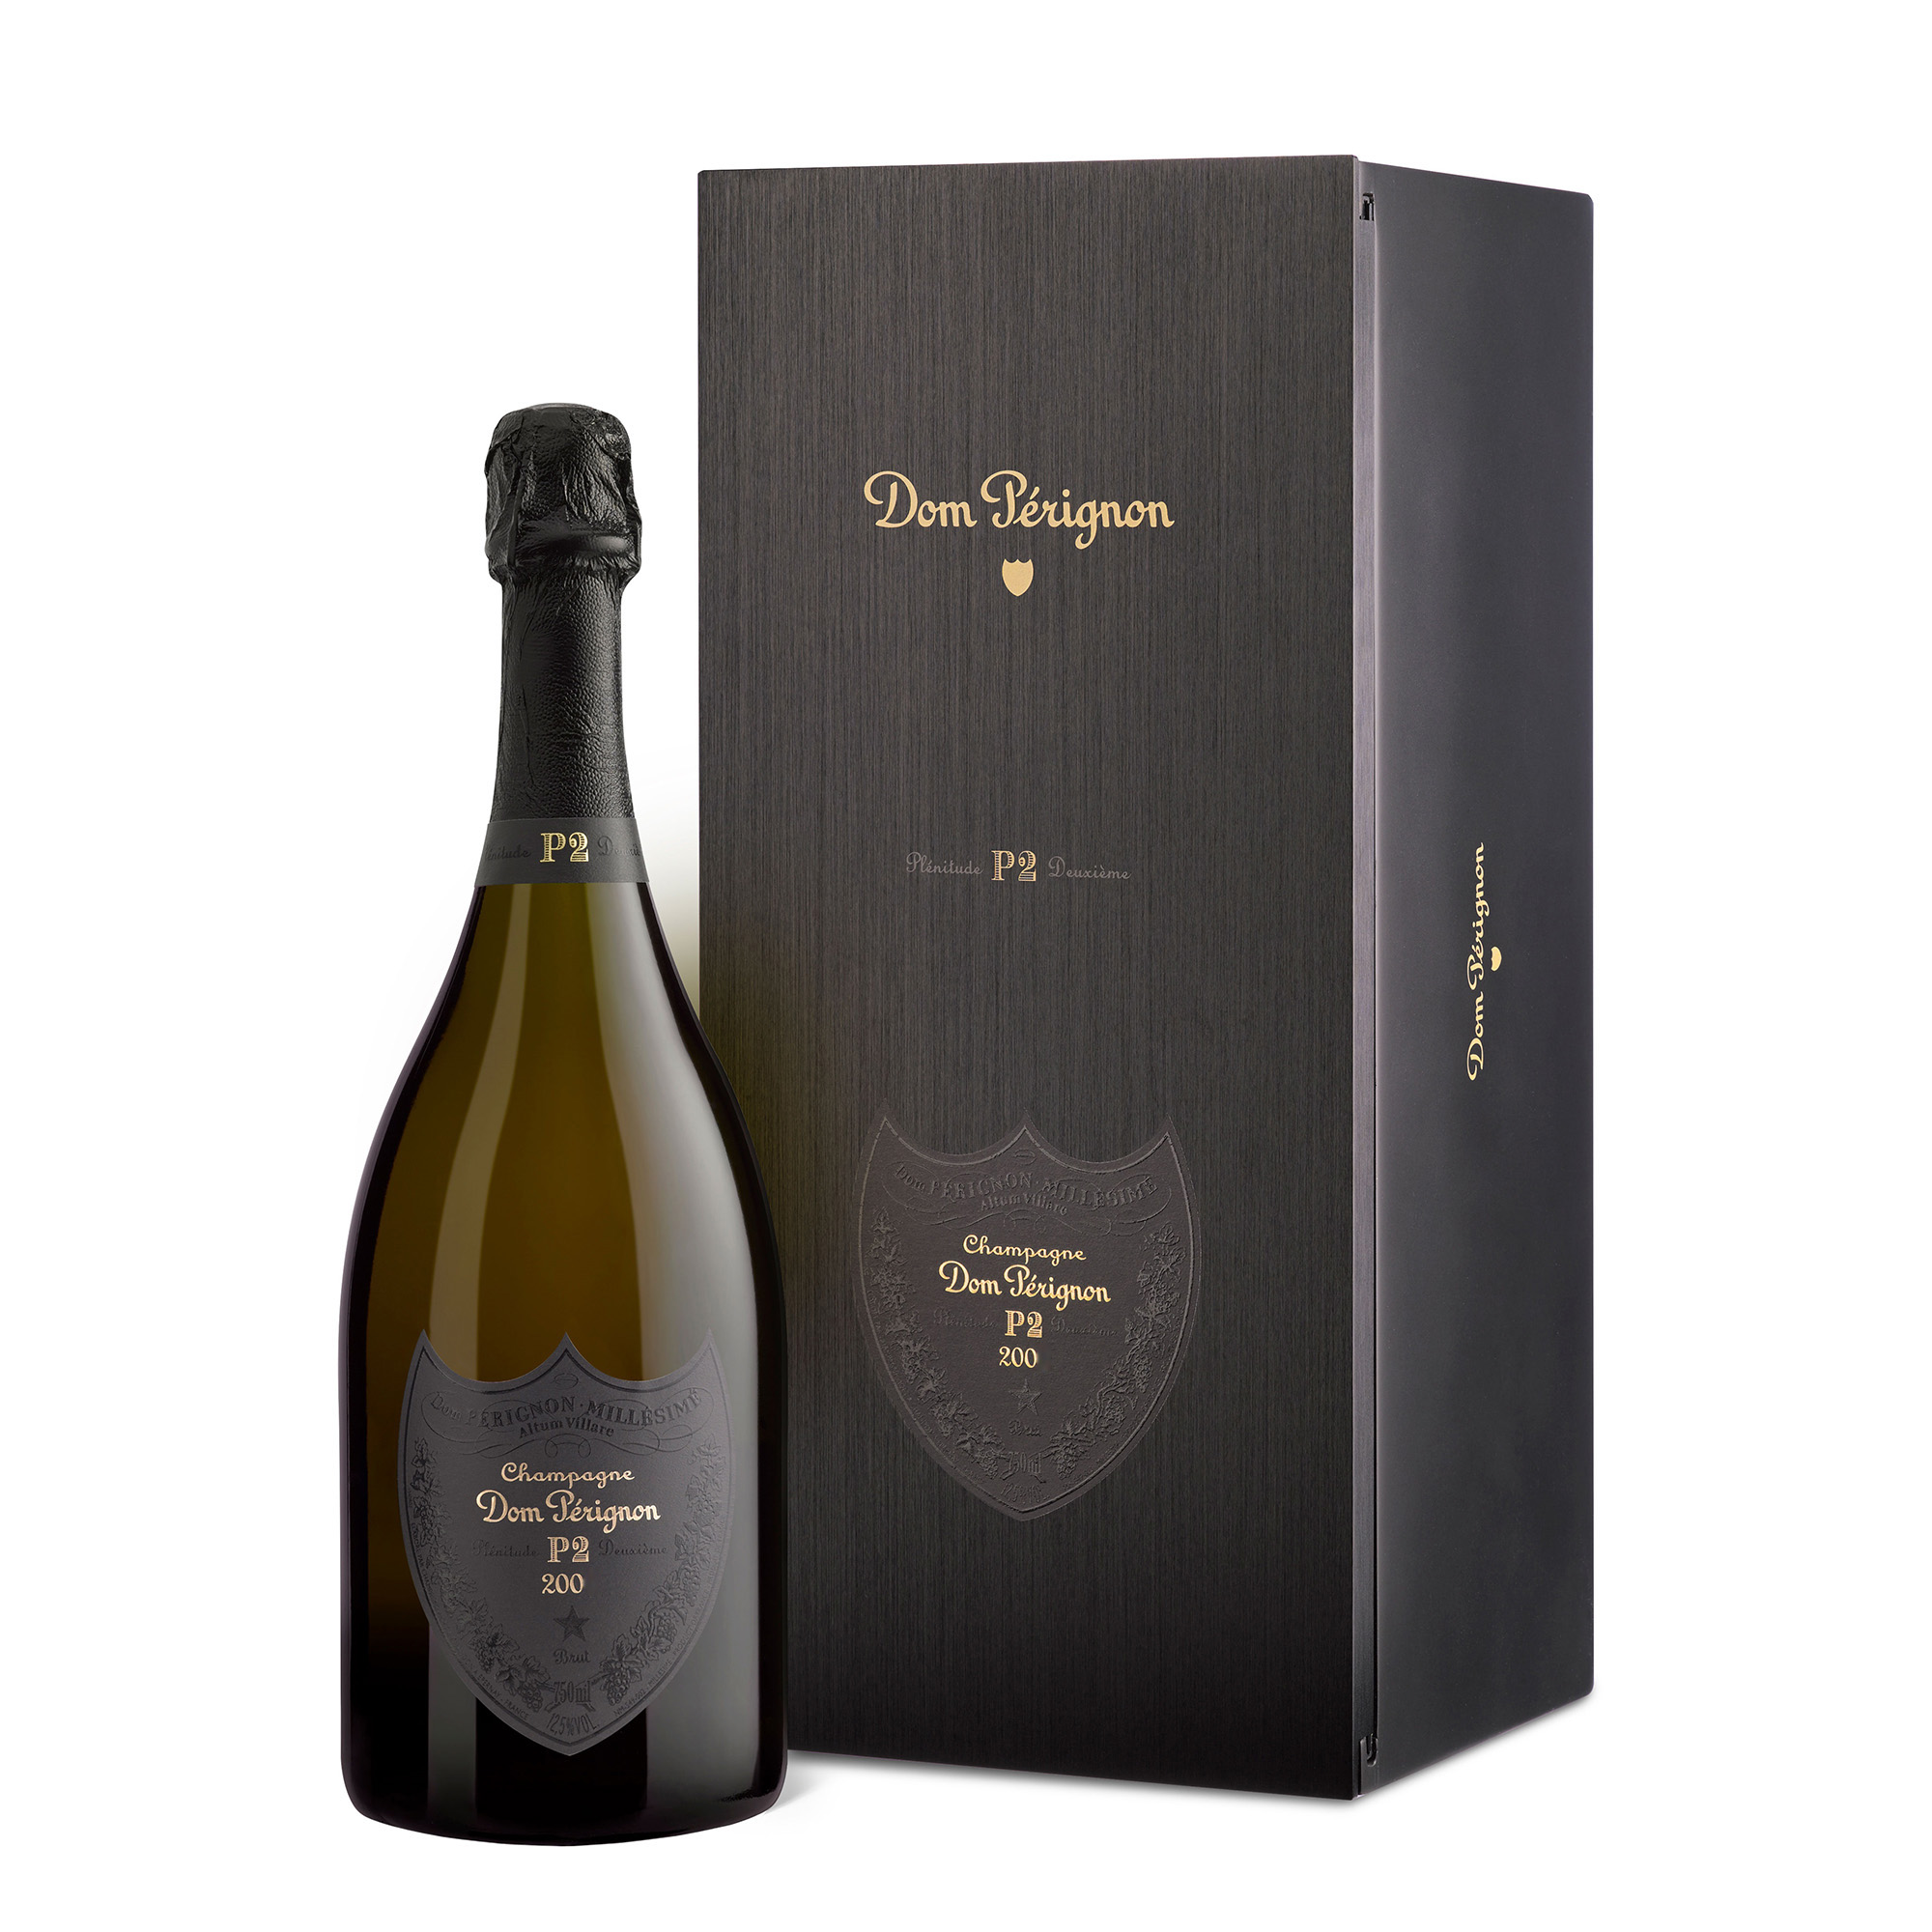 Send Dom Perignon 2000 Plenitude P2 Vintage Champagne 75cl Gift Boxed Online